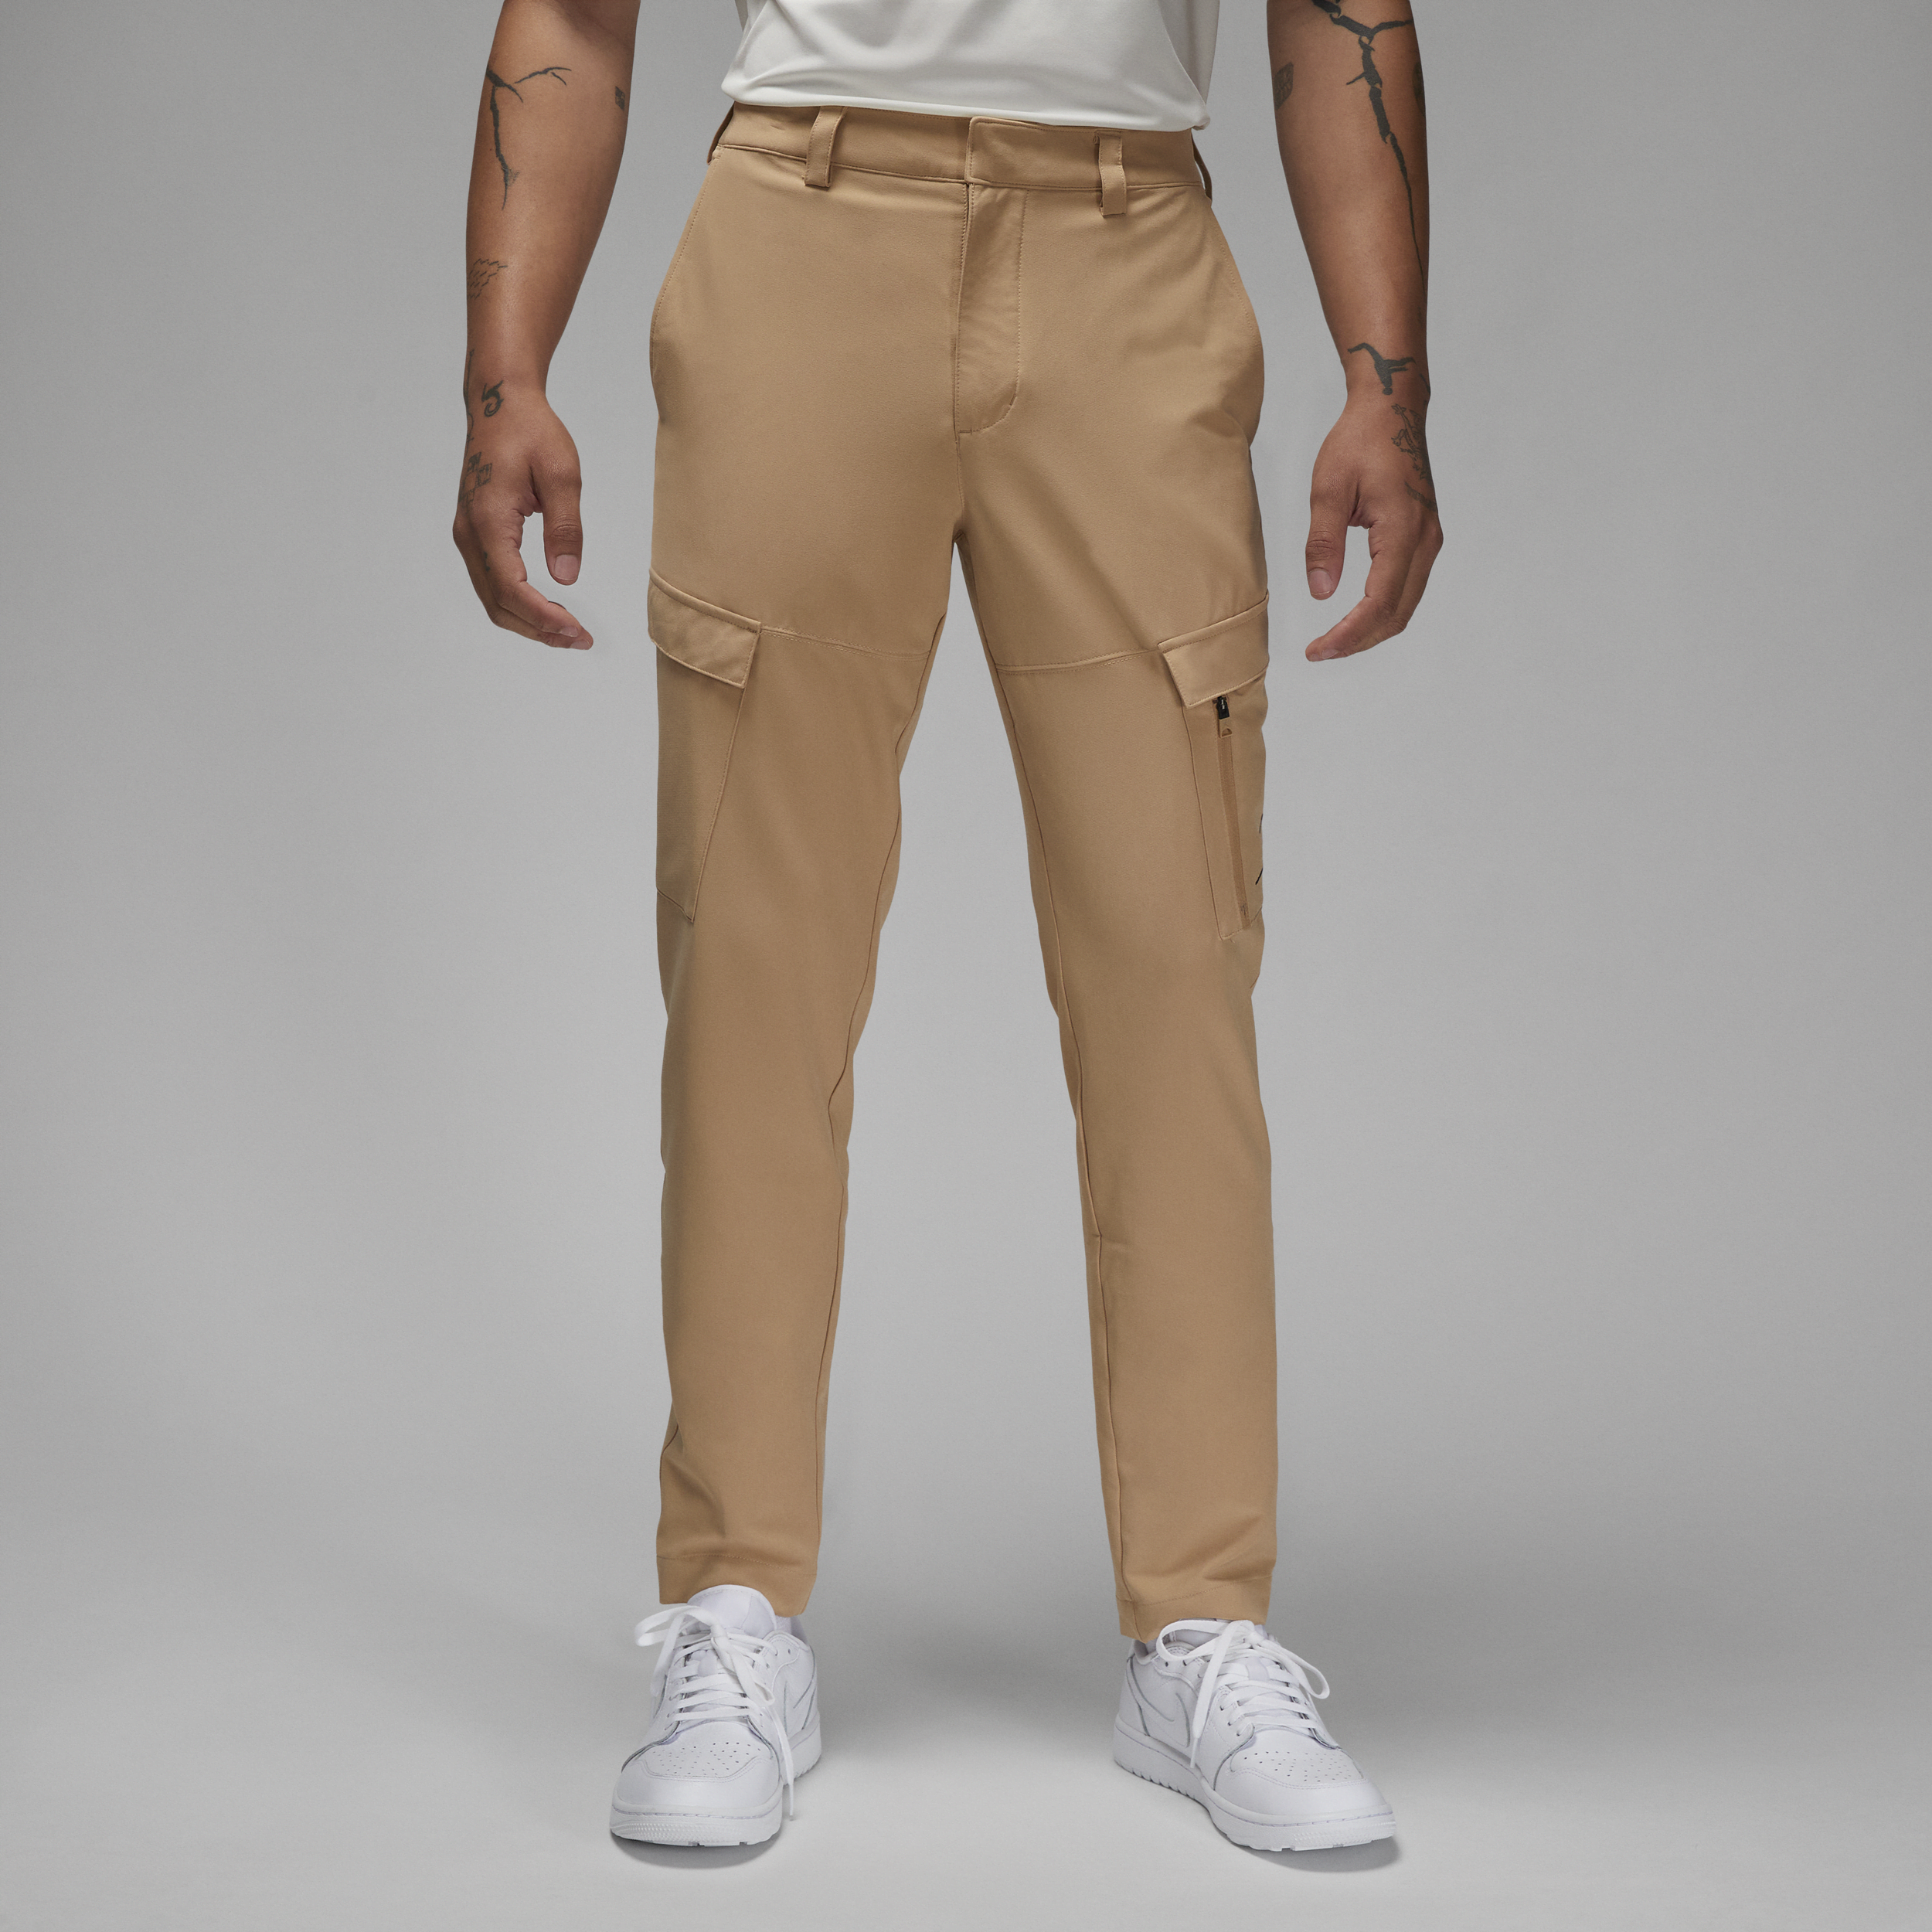 Nike Pantaloni Jordan Golf – Uomo - Marrone